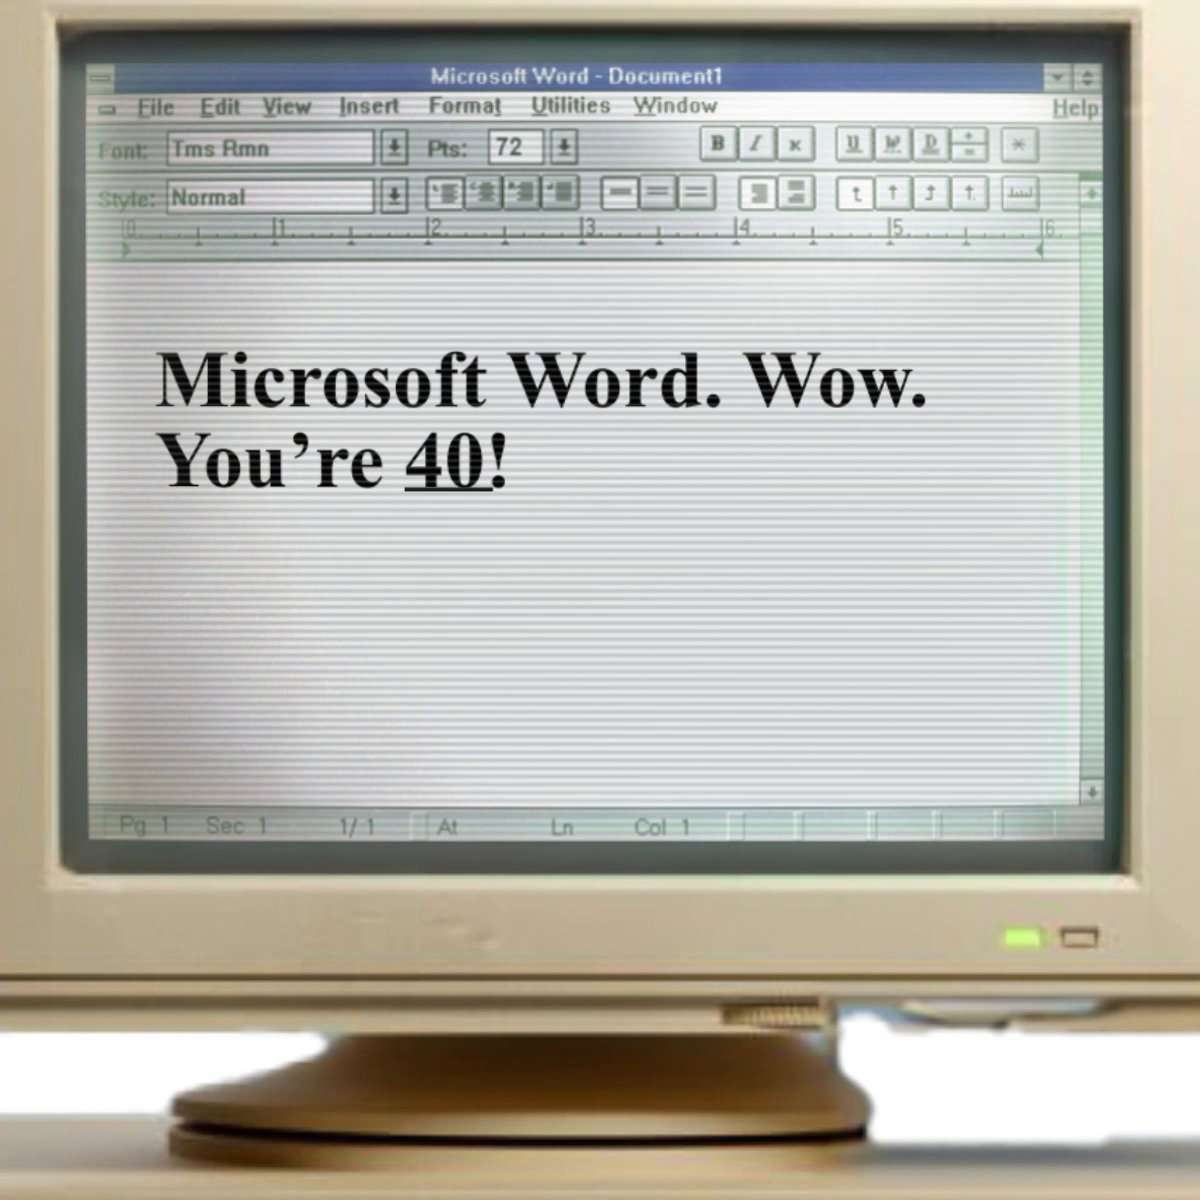 Microsoft Word turns 40!